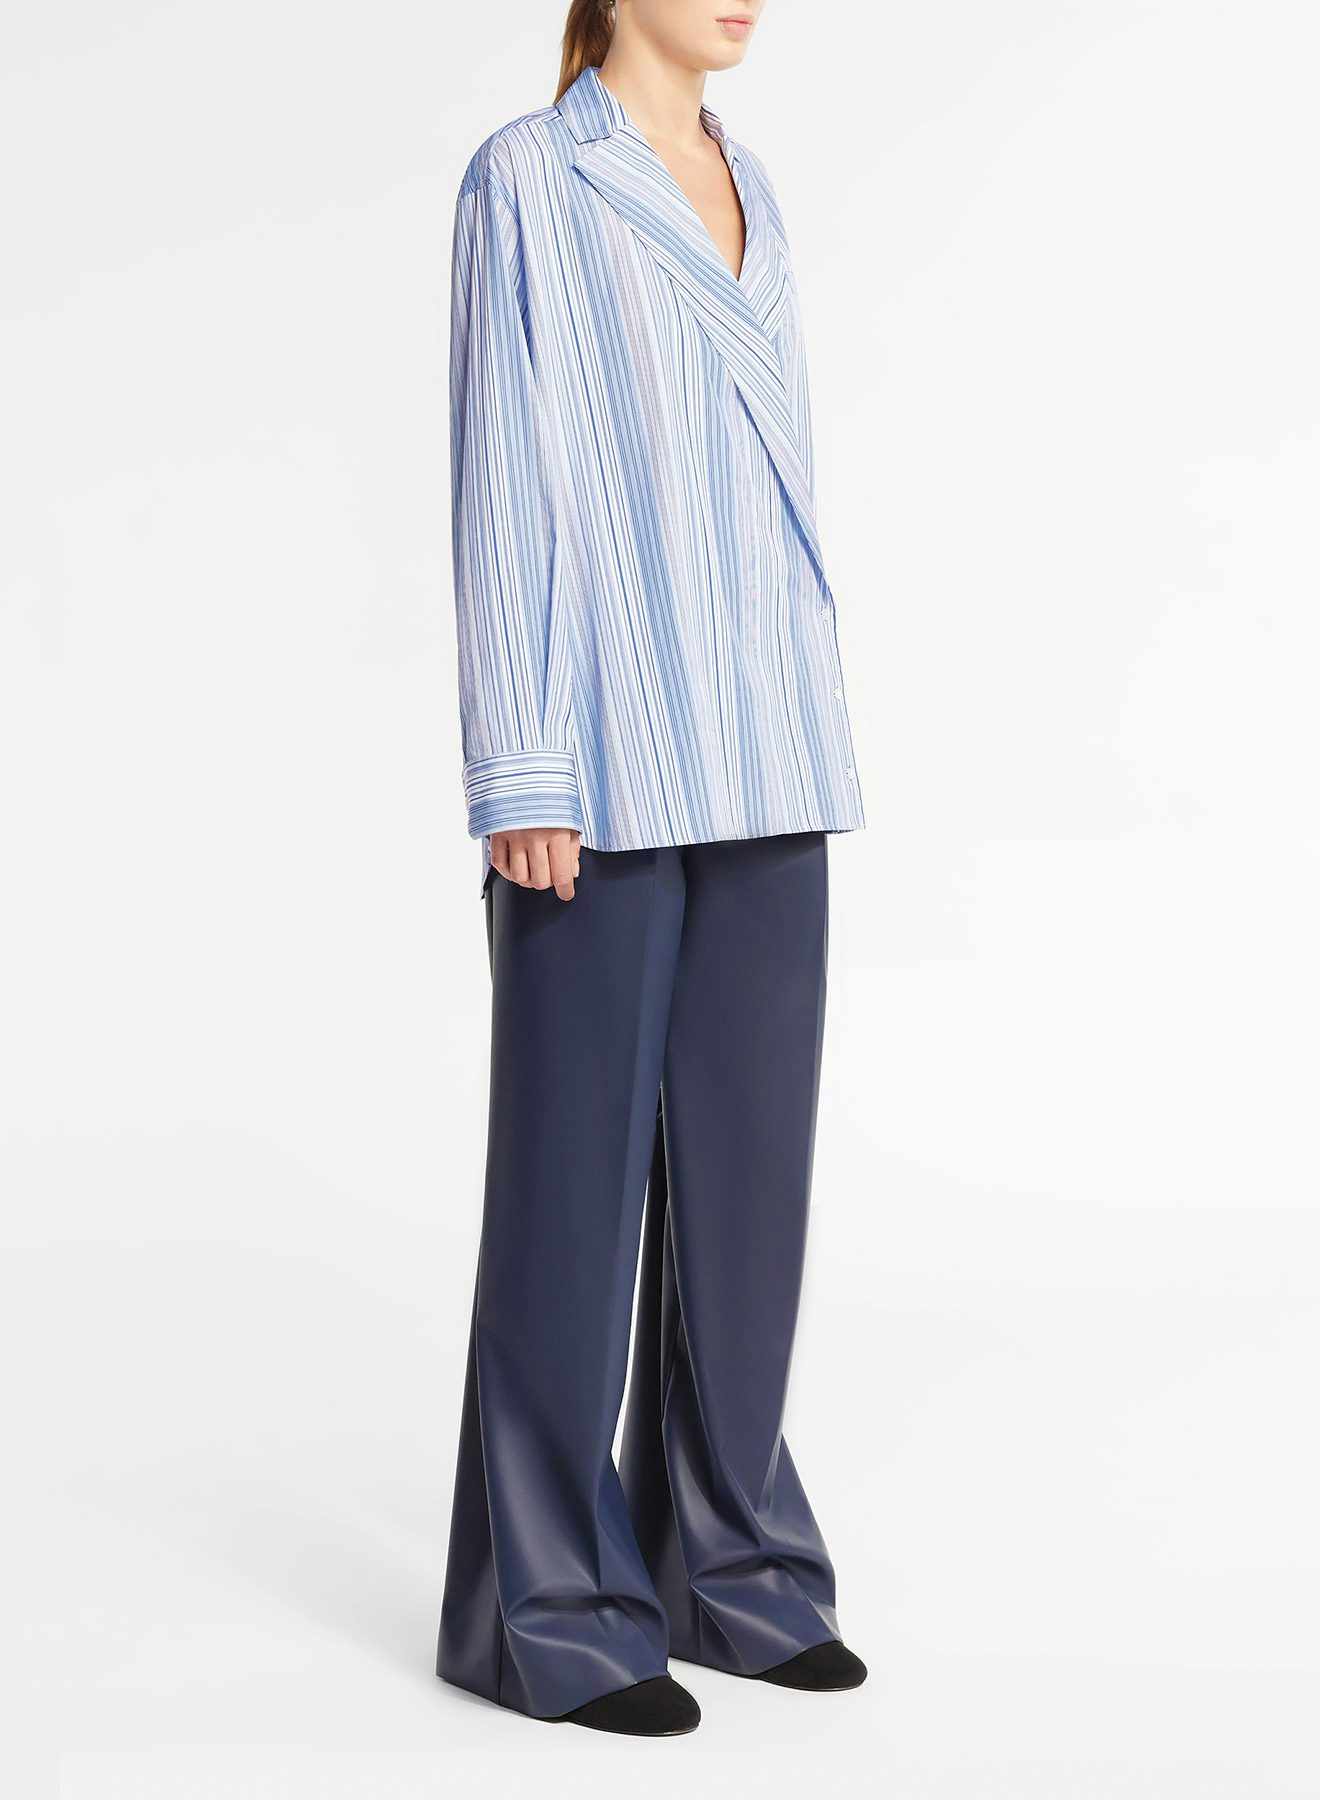 Criss-cross blue striped blouse - Nina Ricci